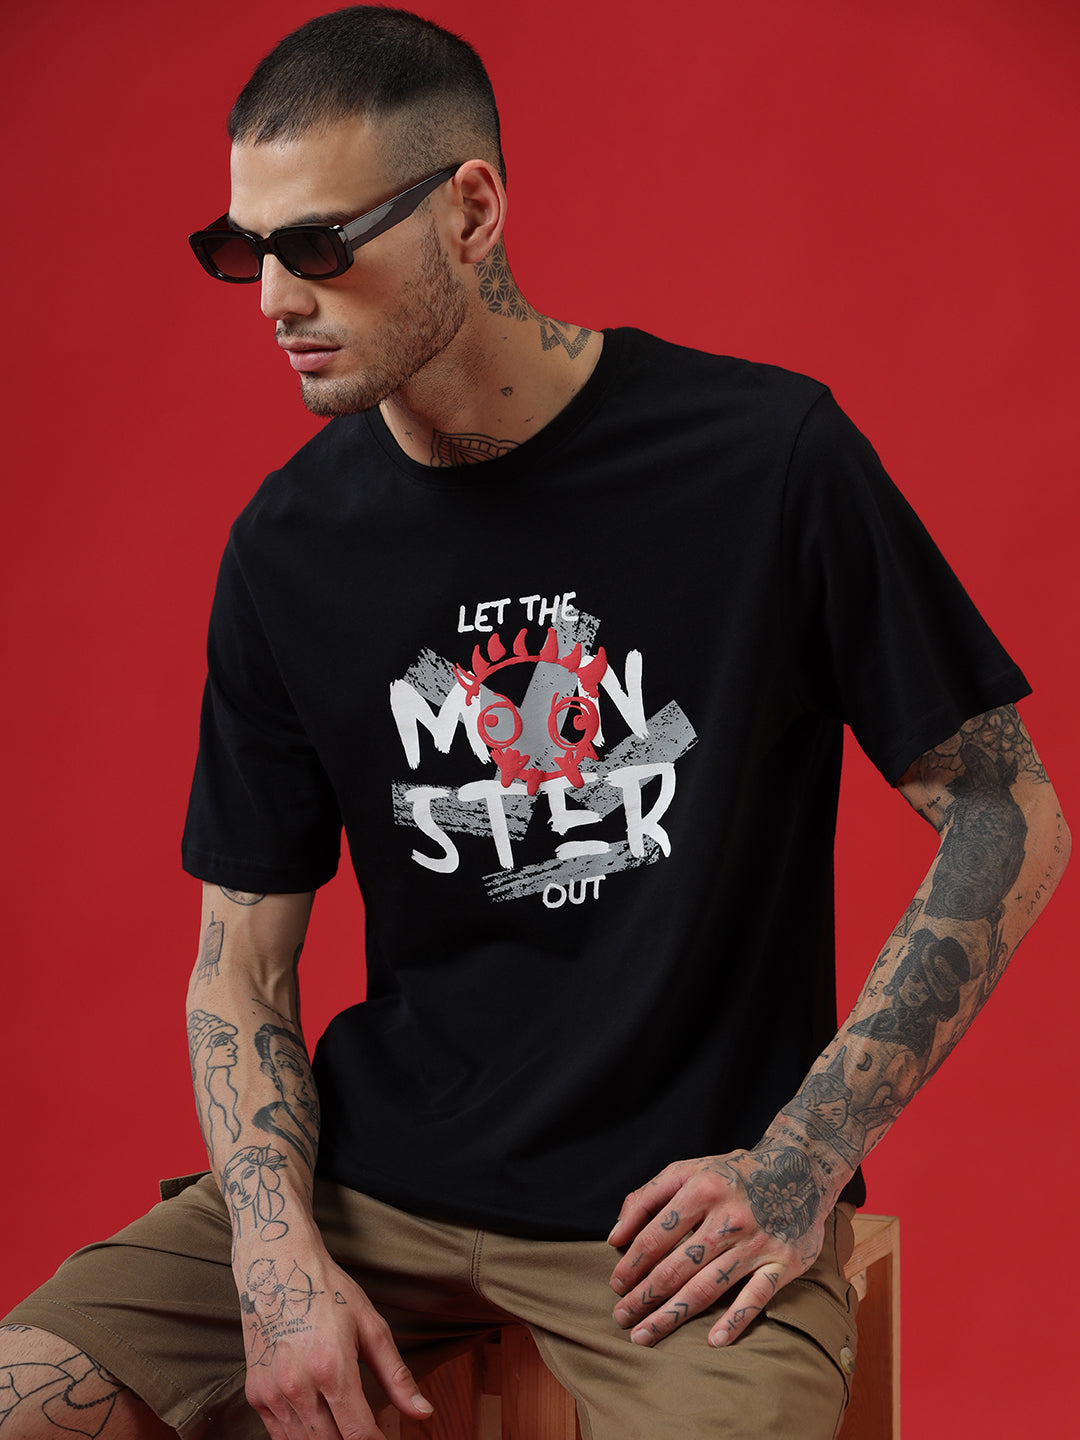 Memoir Tattoo 'Metal Church' inspired Sleeveless T-Shirt | Memoir Tattoo